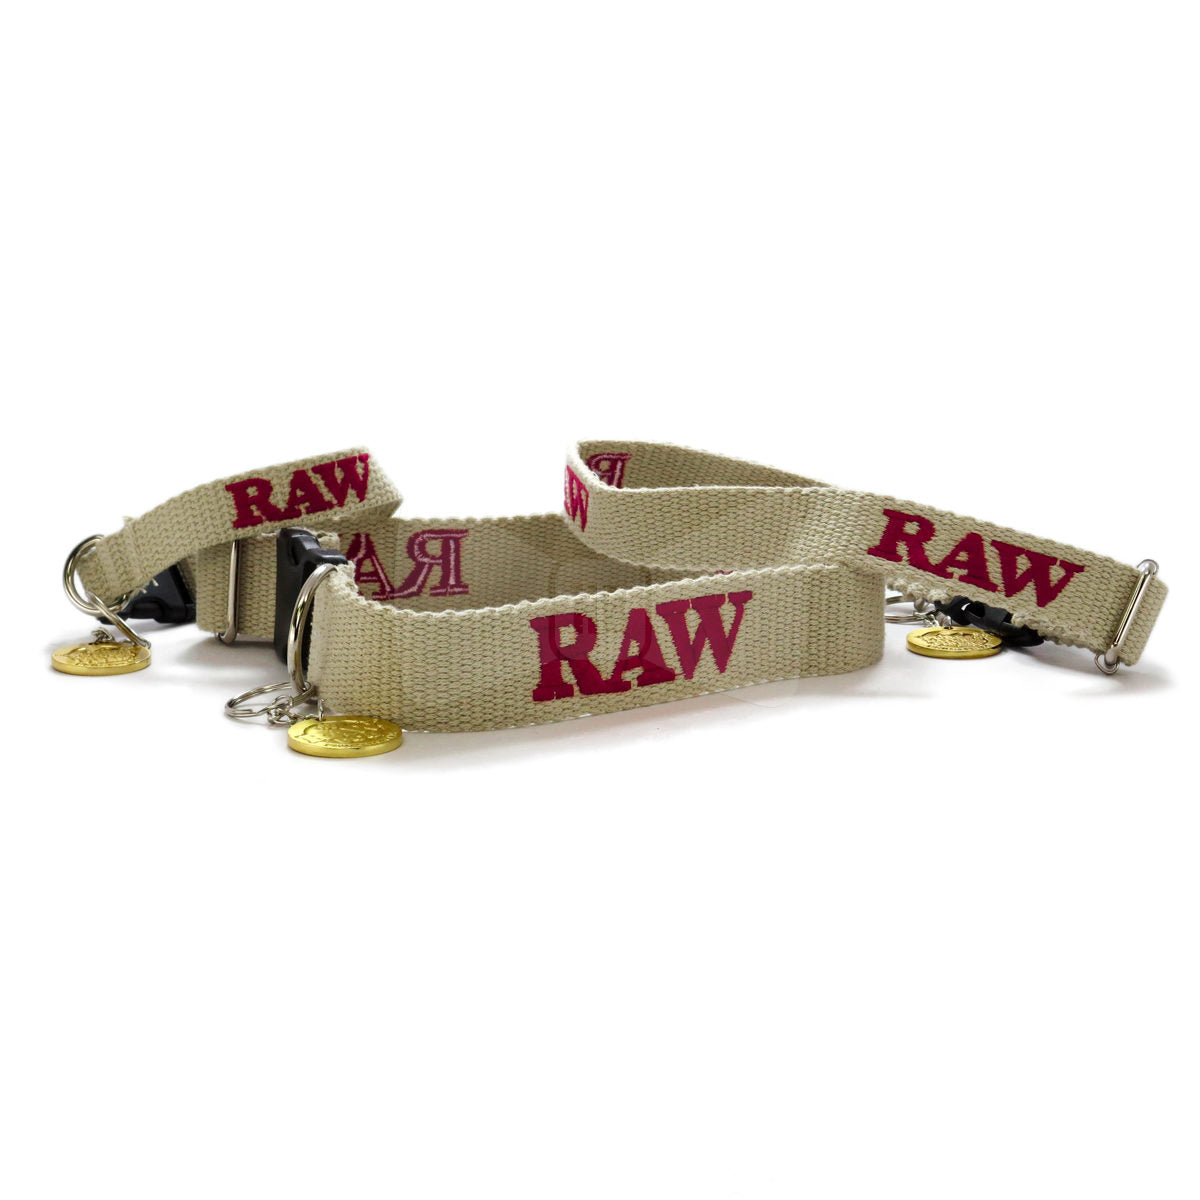 Raw - Hemp Pet Collar Small